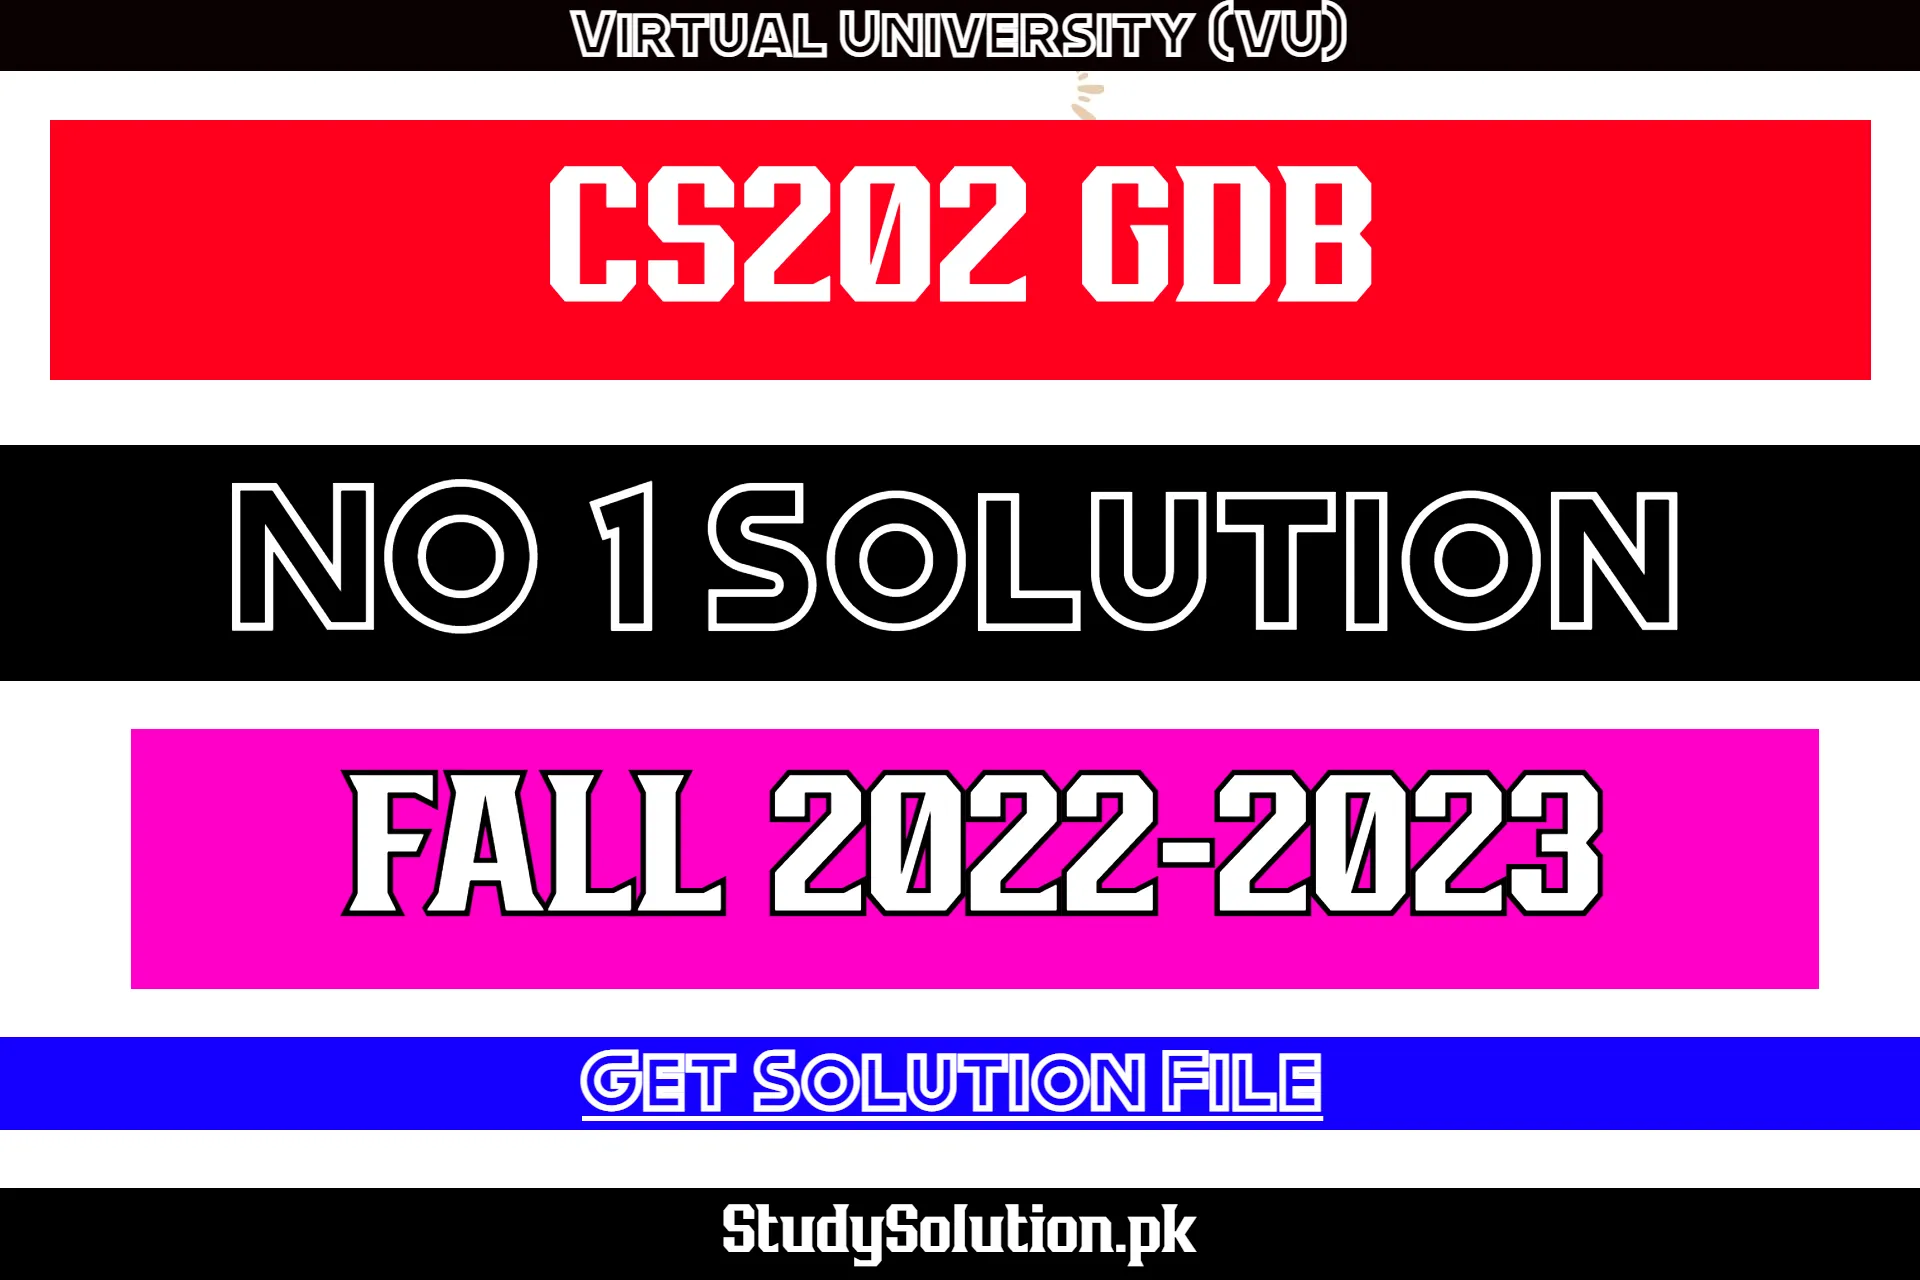 CS202 GDB No 1 Solution Fall 2022